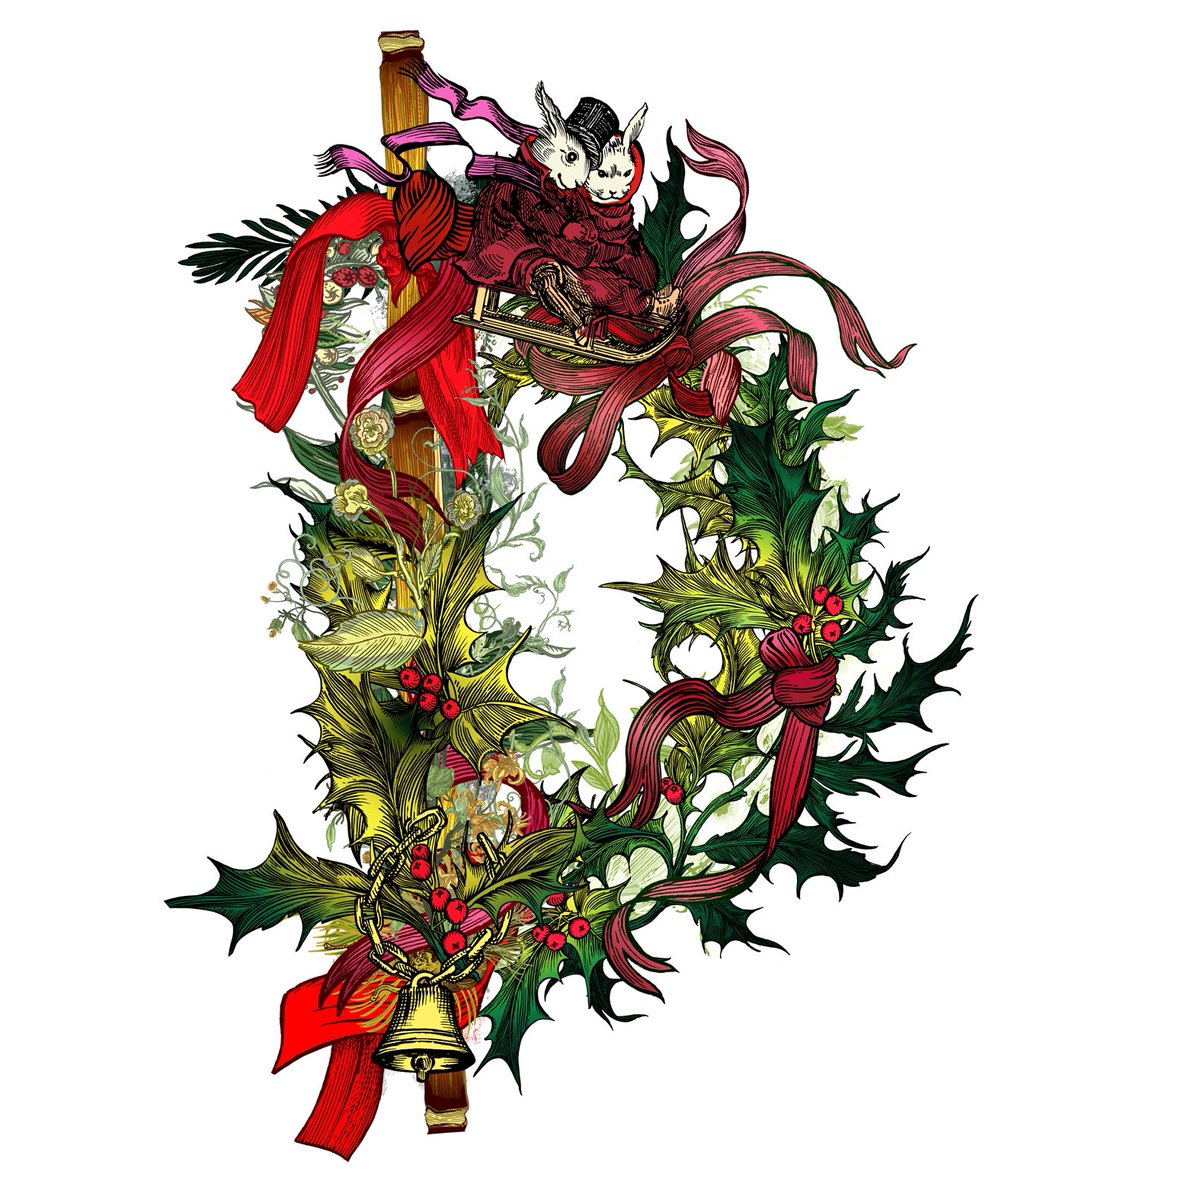 The decorative delights of December #december #festivedecorations #illustration #theletterd #artwork #designers